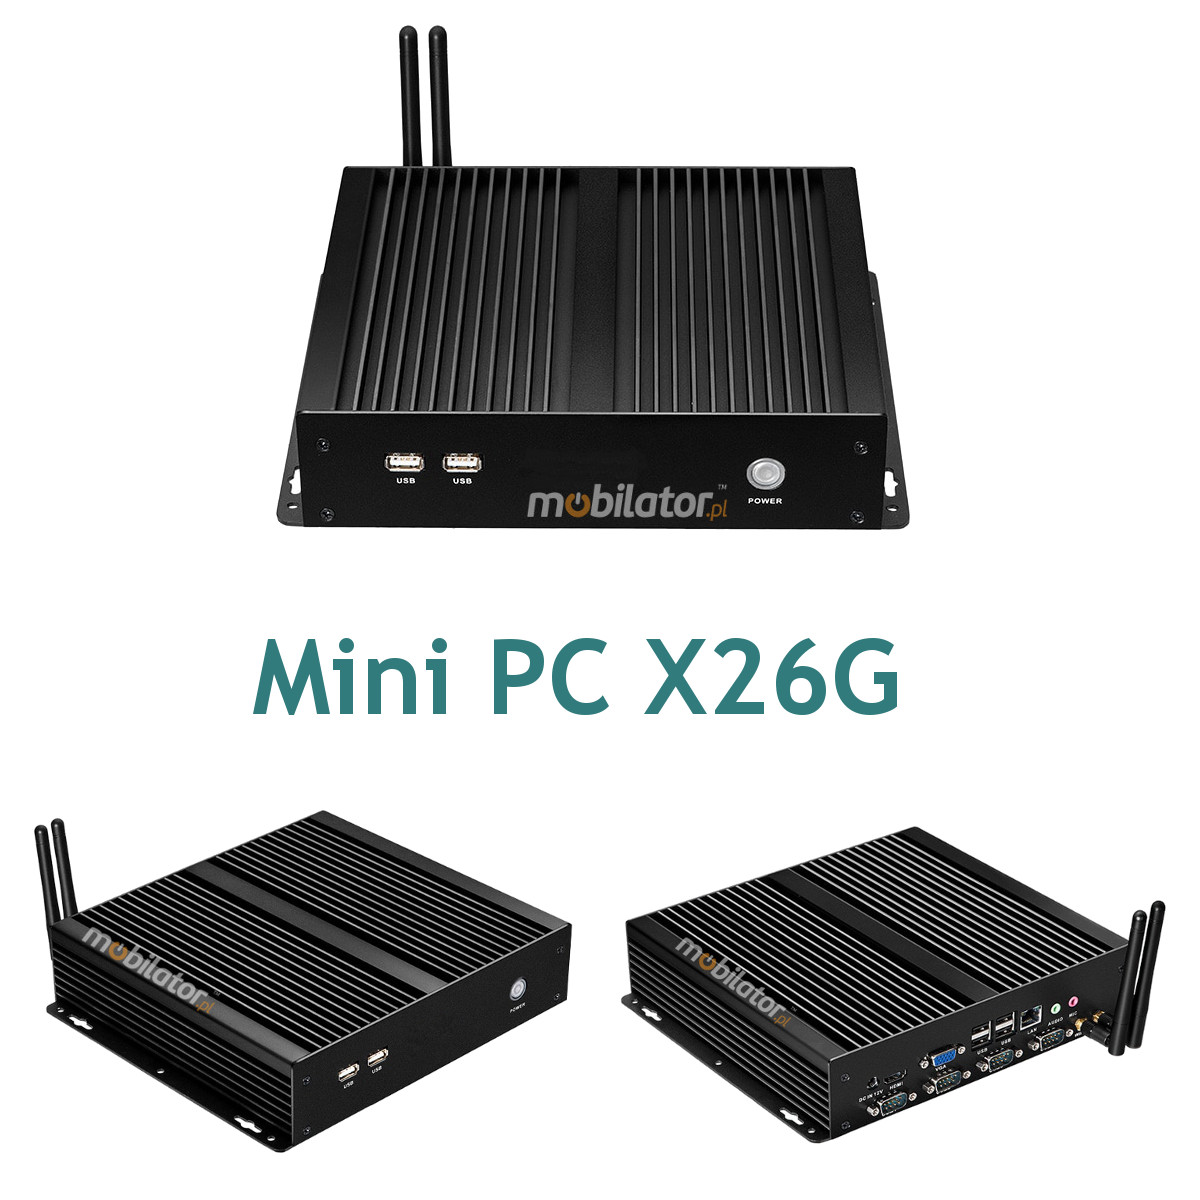 MiniPC yBOX-X26G Bezwentylatorowy May Komputer mobilator pl